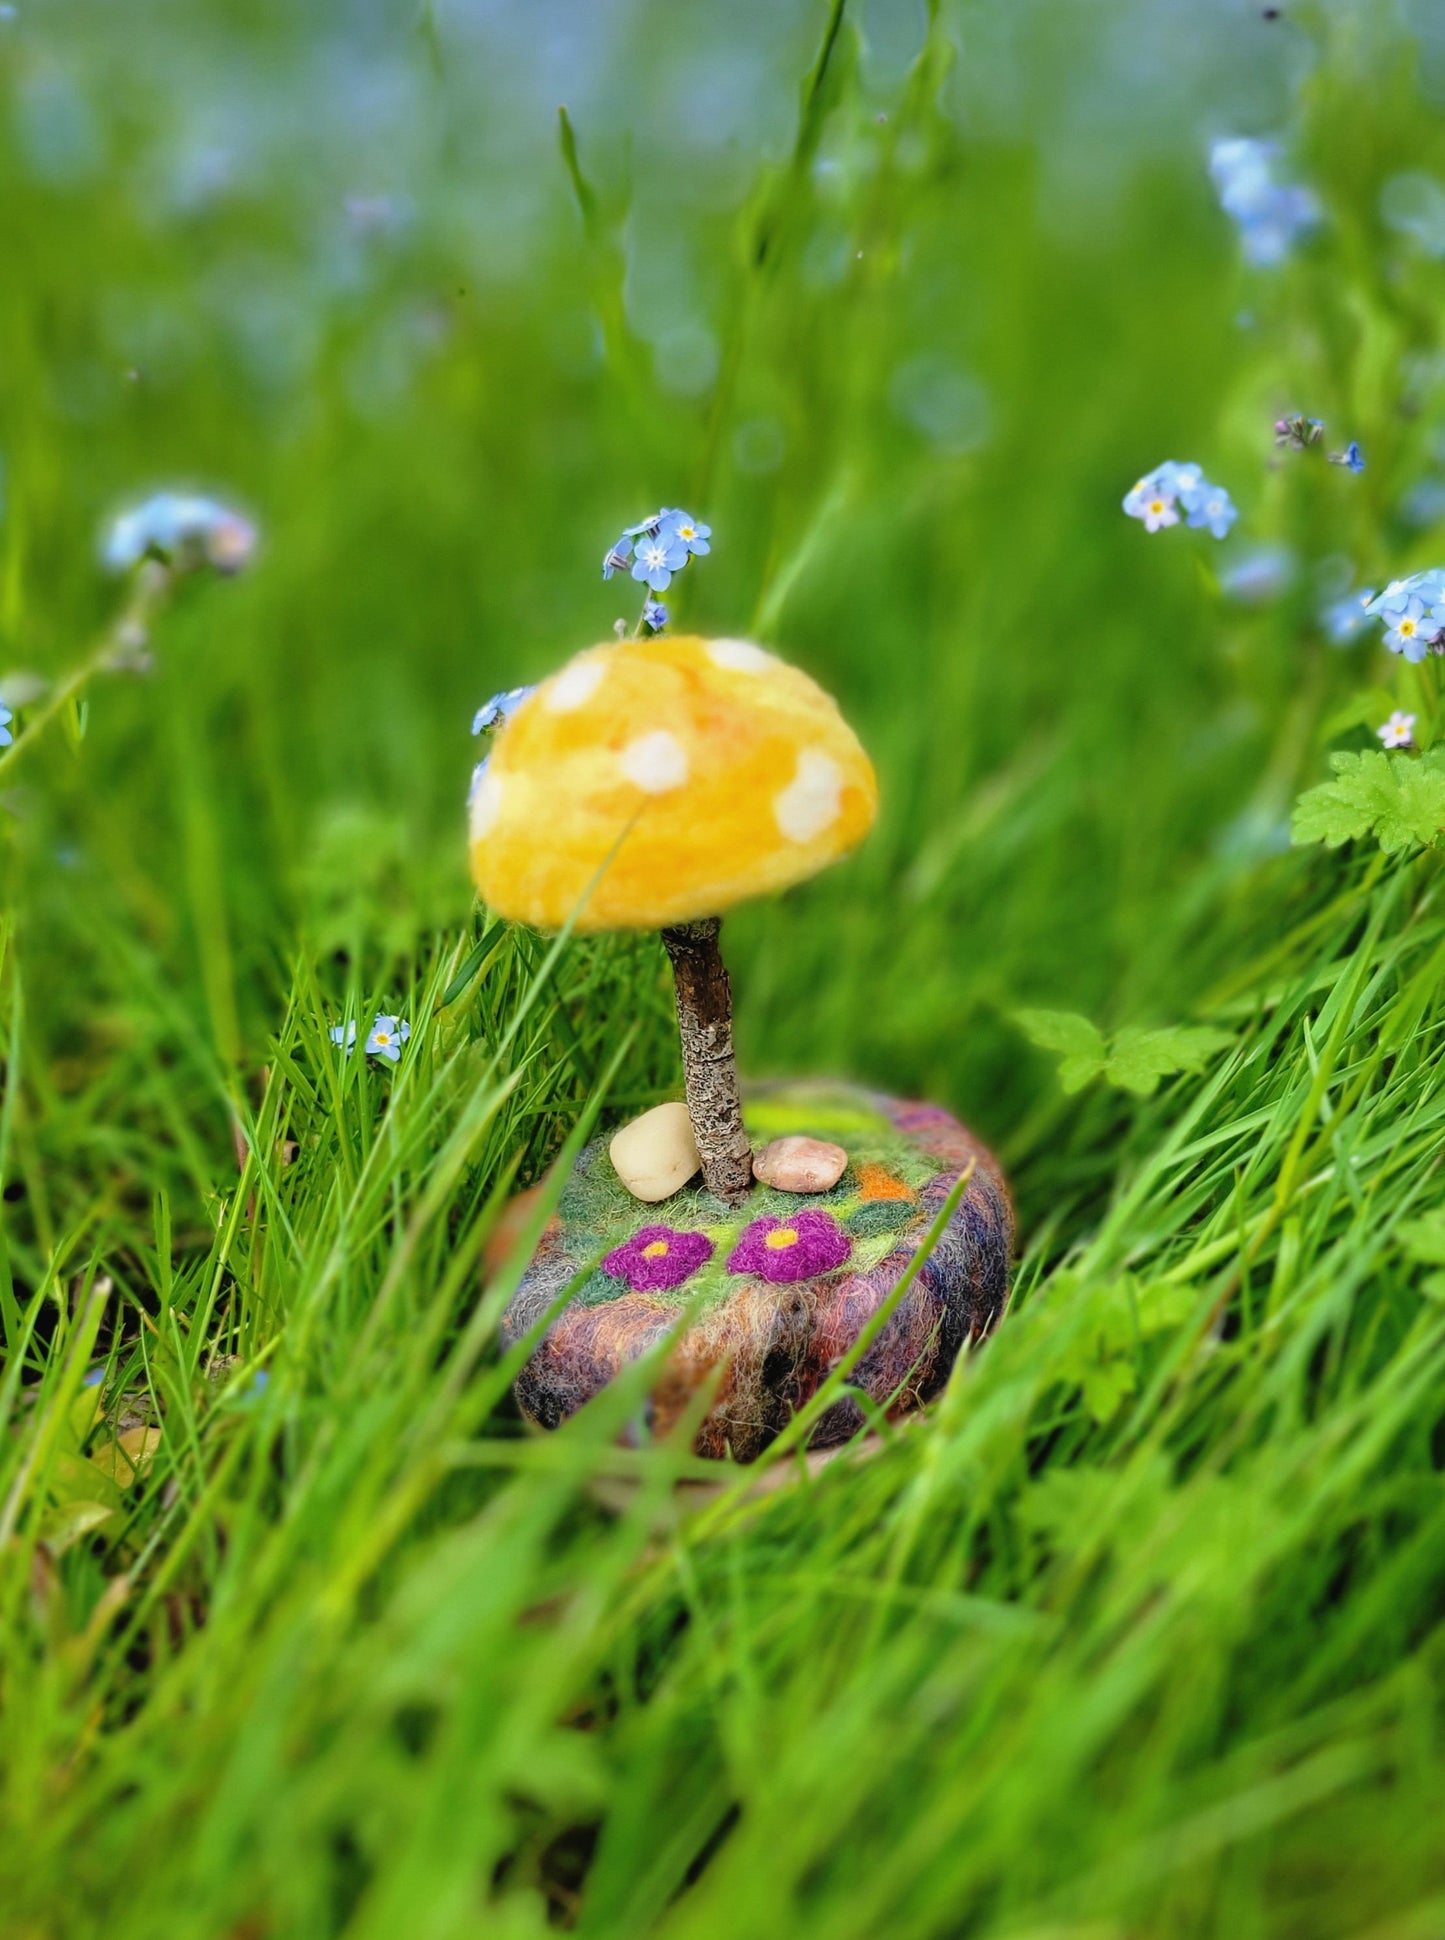 Yellow Mushroom Sculpture - Single